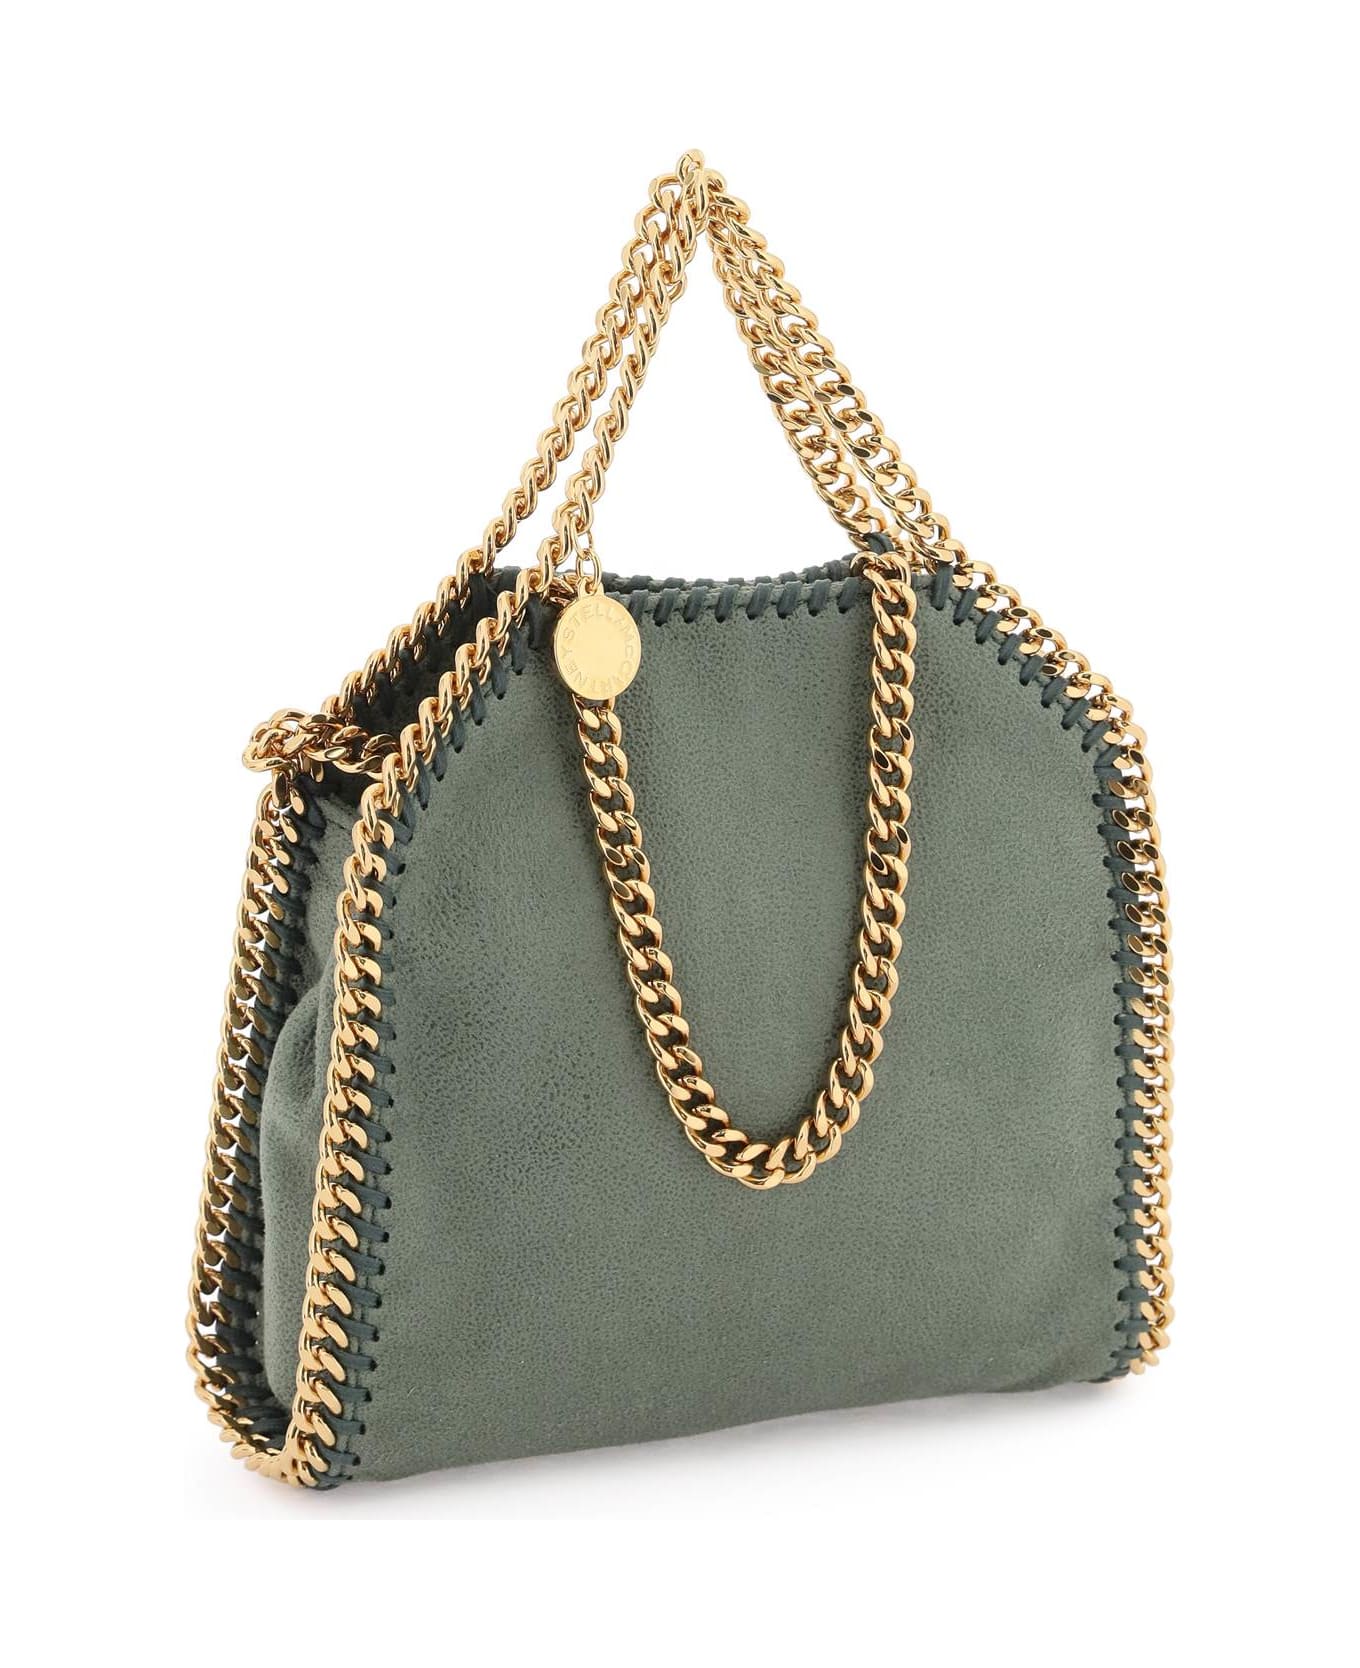 Stella McCartney Falabella Handbag - Stone Green